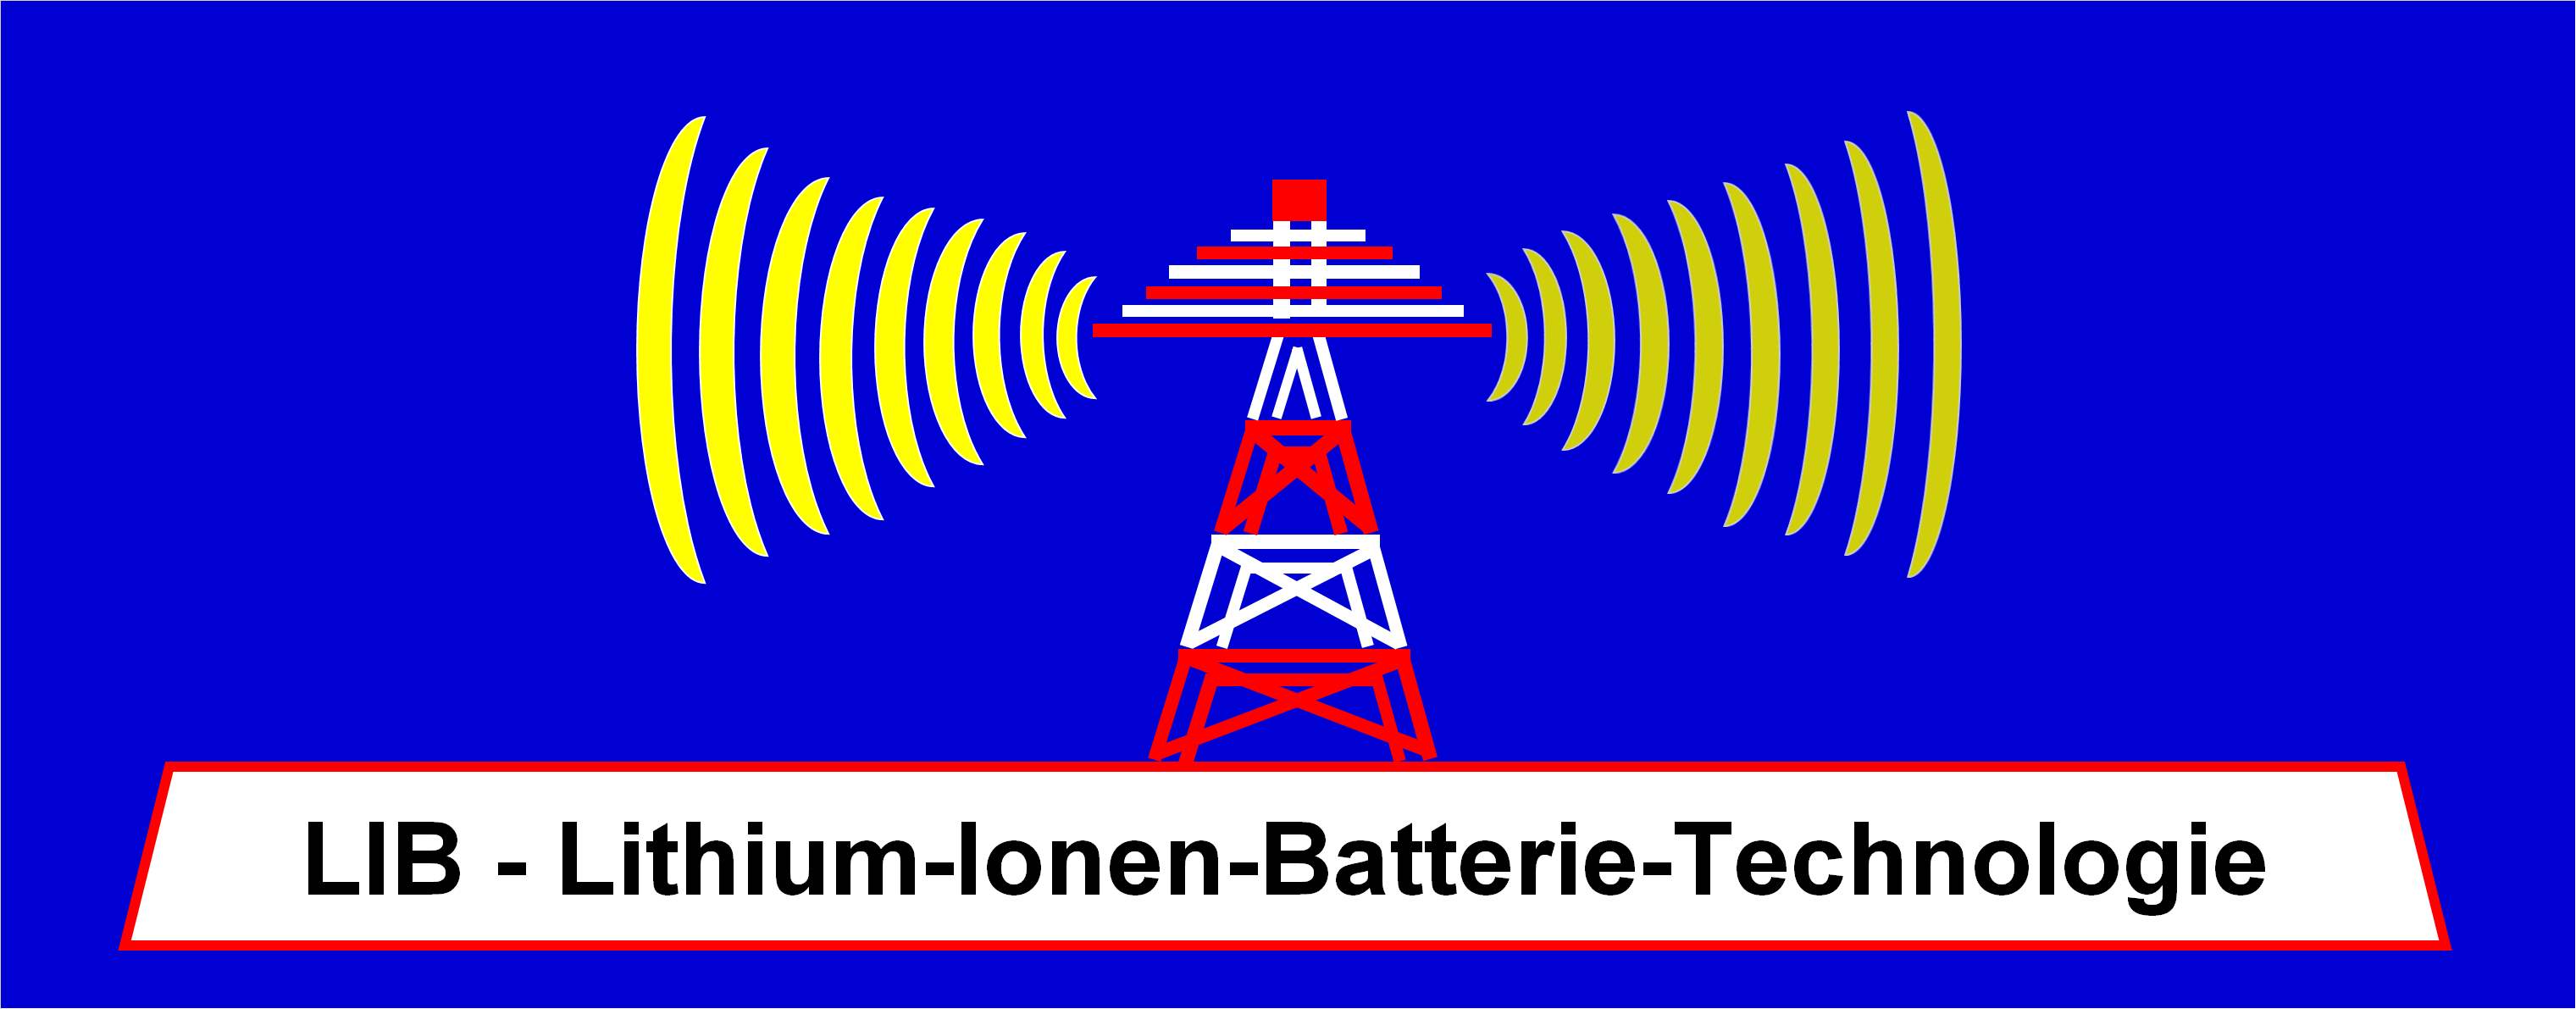 LIB - Lithium-Ionen-Batterie-Technologie